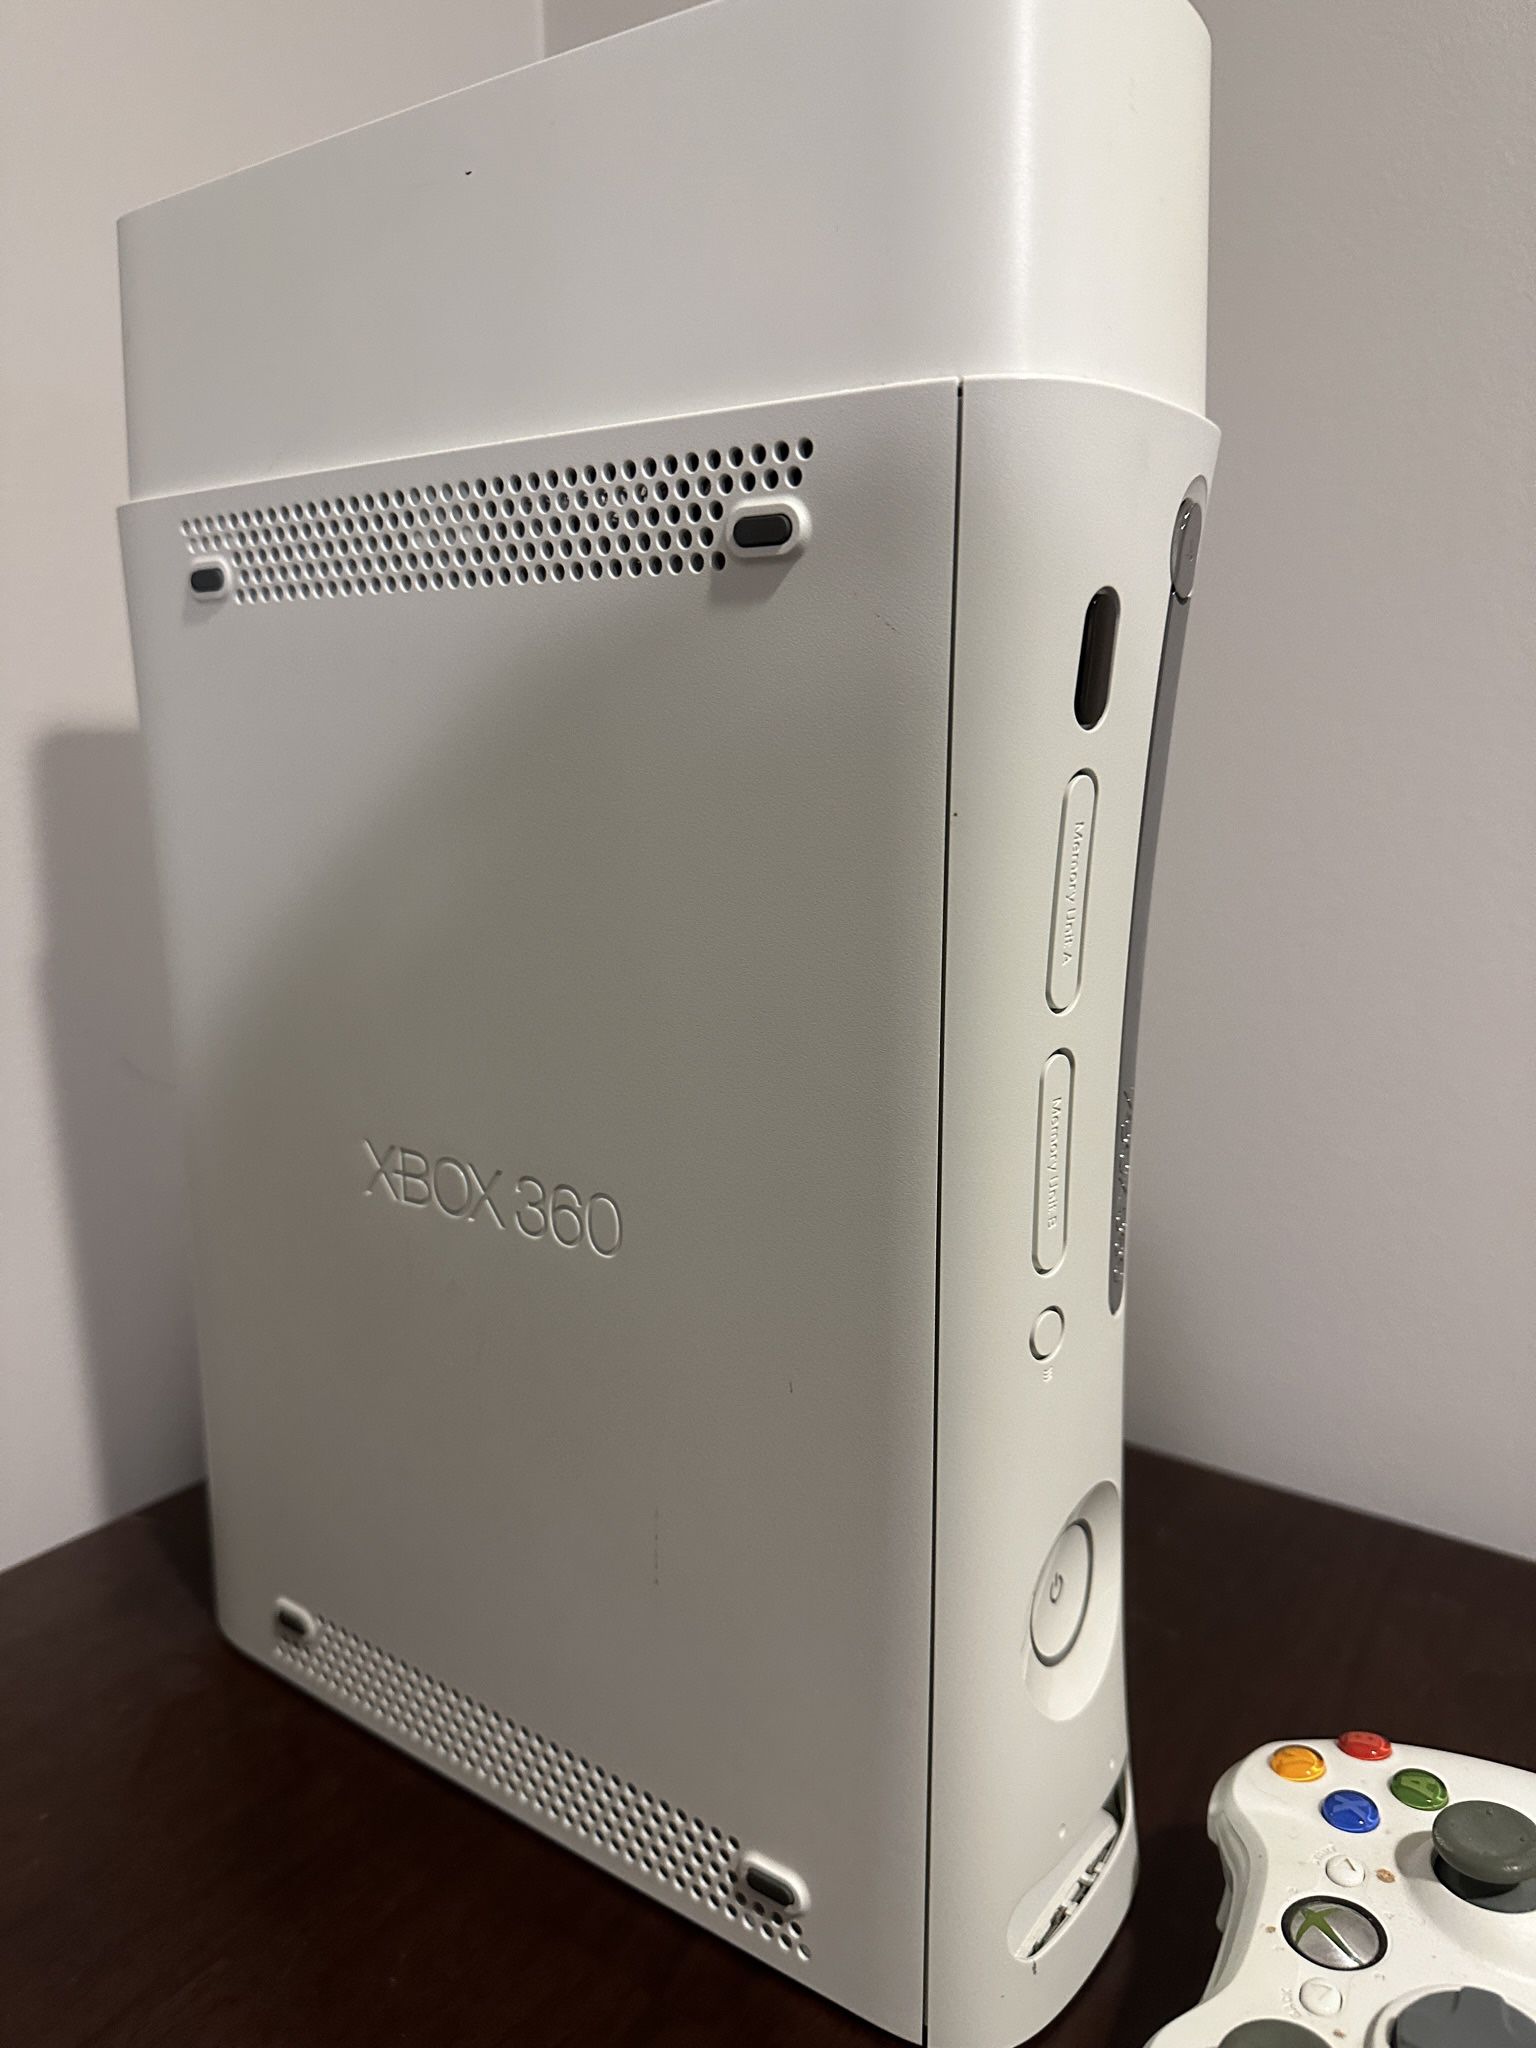 Xbox 360 XDK development kit